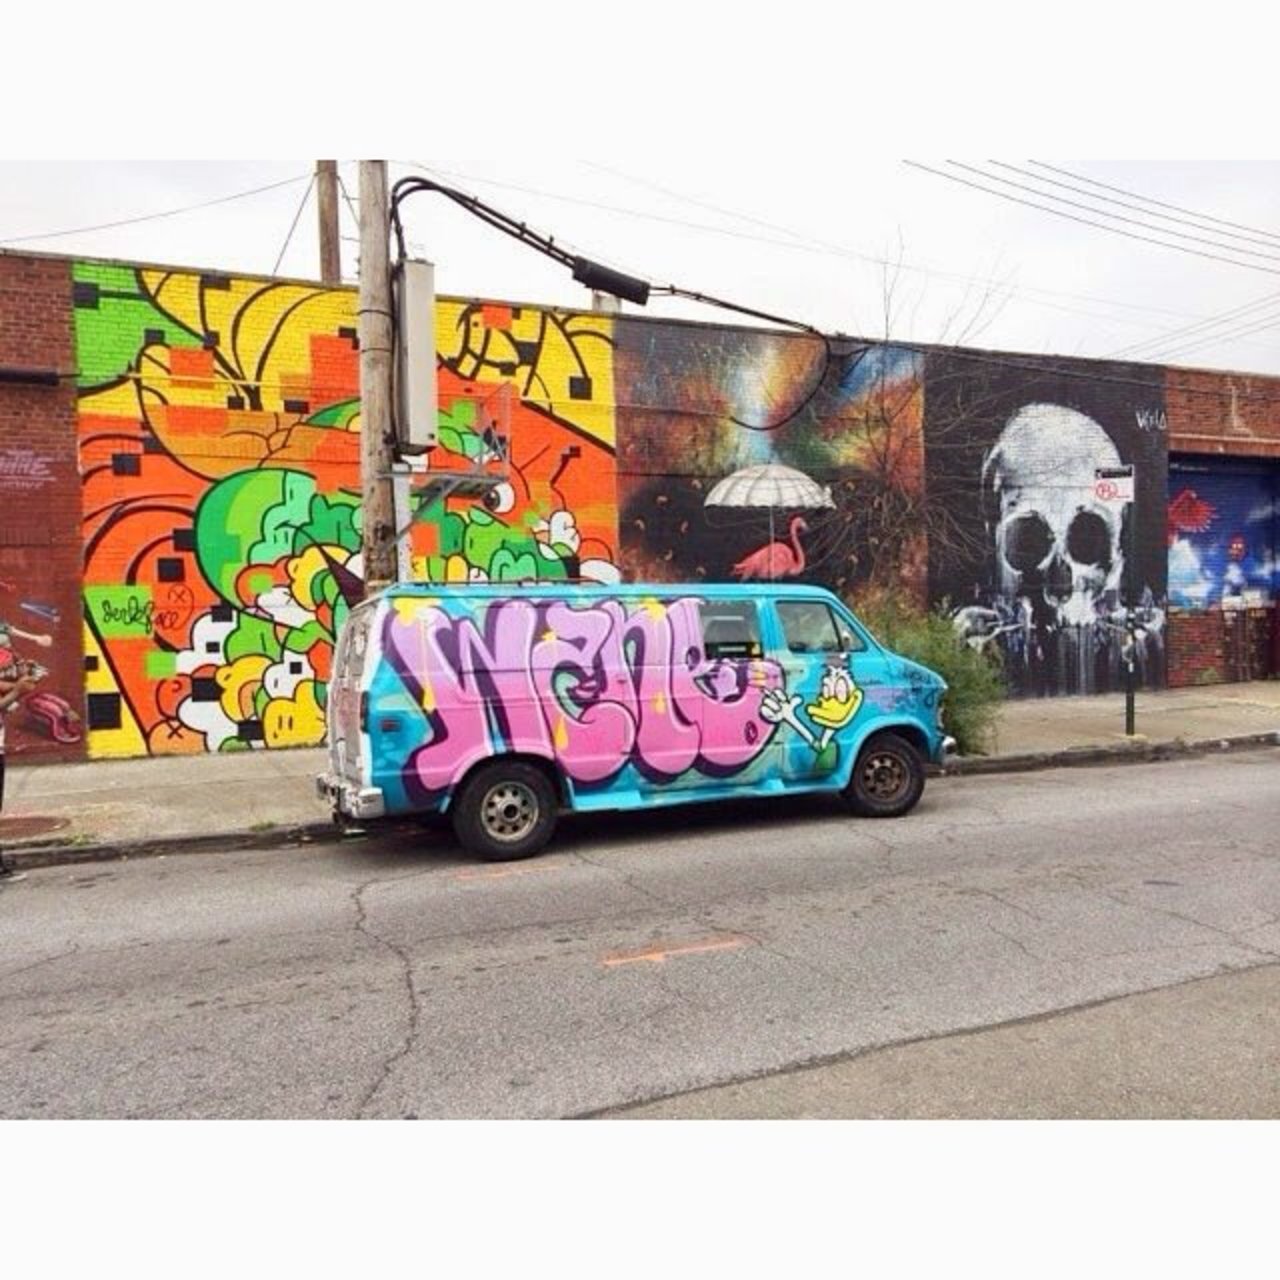 RT @False_Prophet__: I saw this van in #brooklyn . Does anyone know of the #artist ? #streetart #graffiti https://t.co/WjHvrZ4CJI